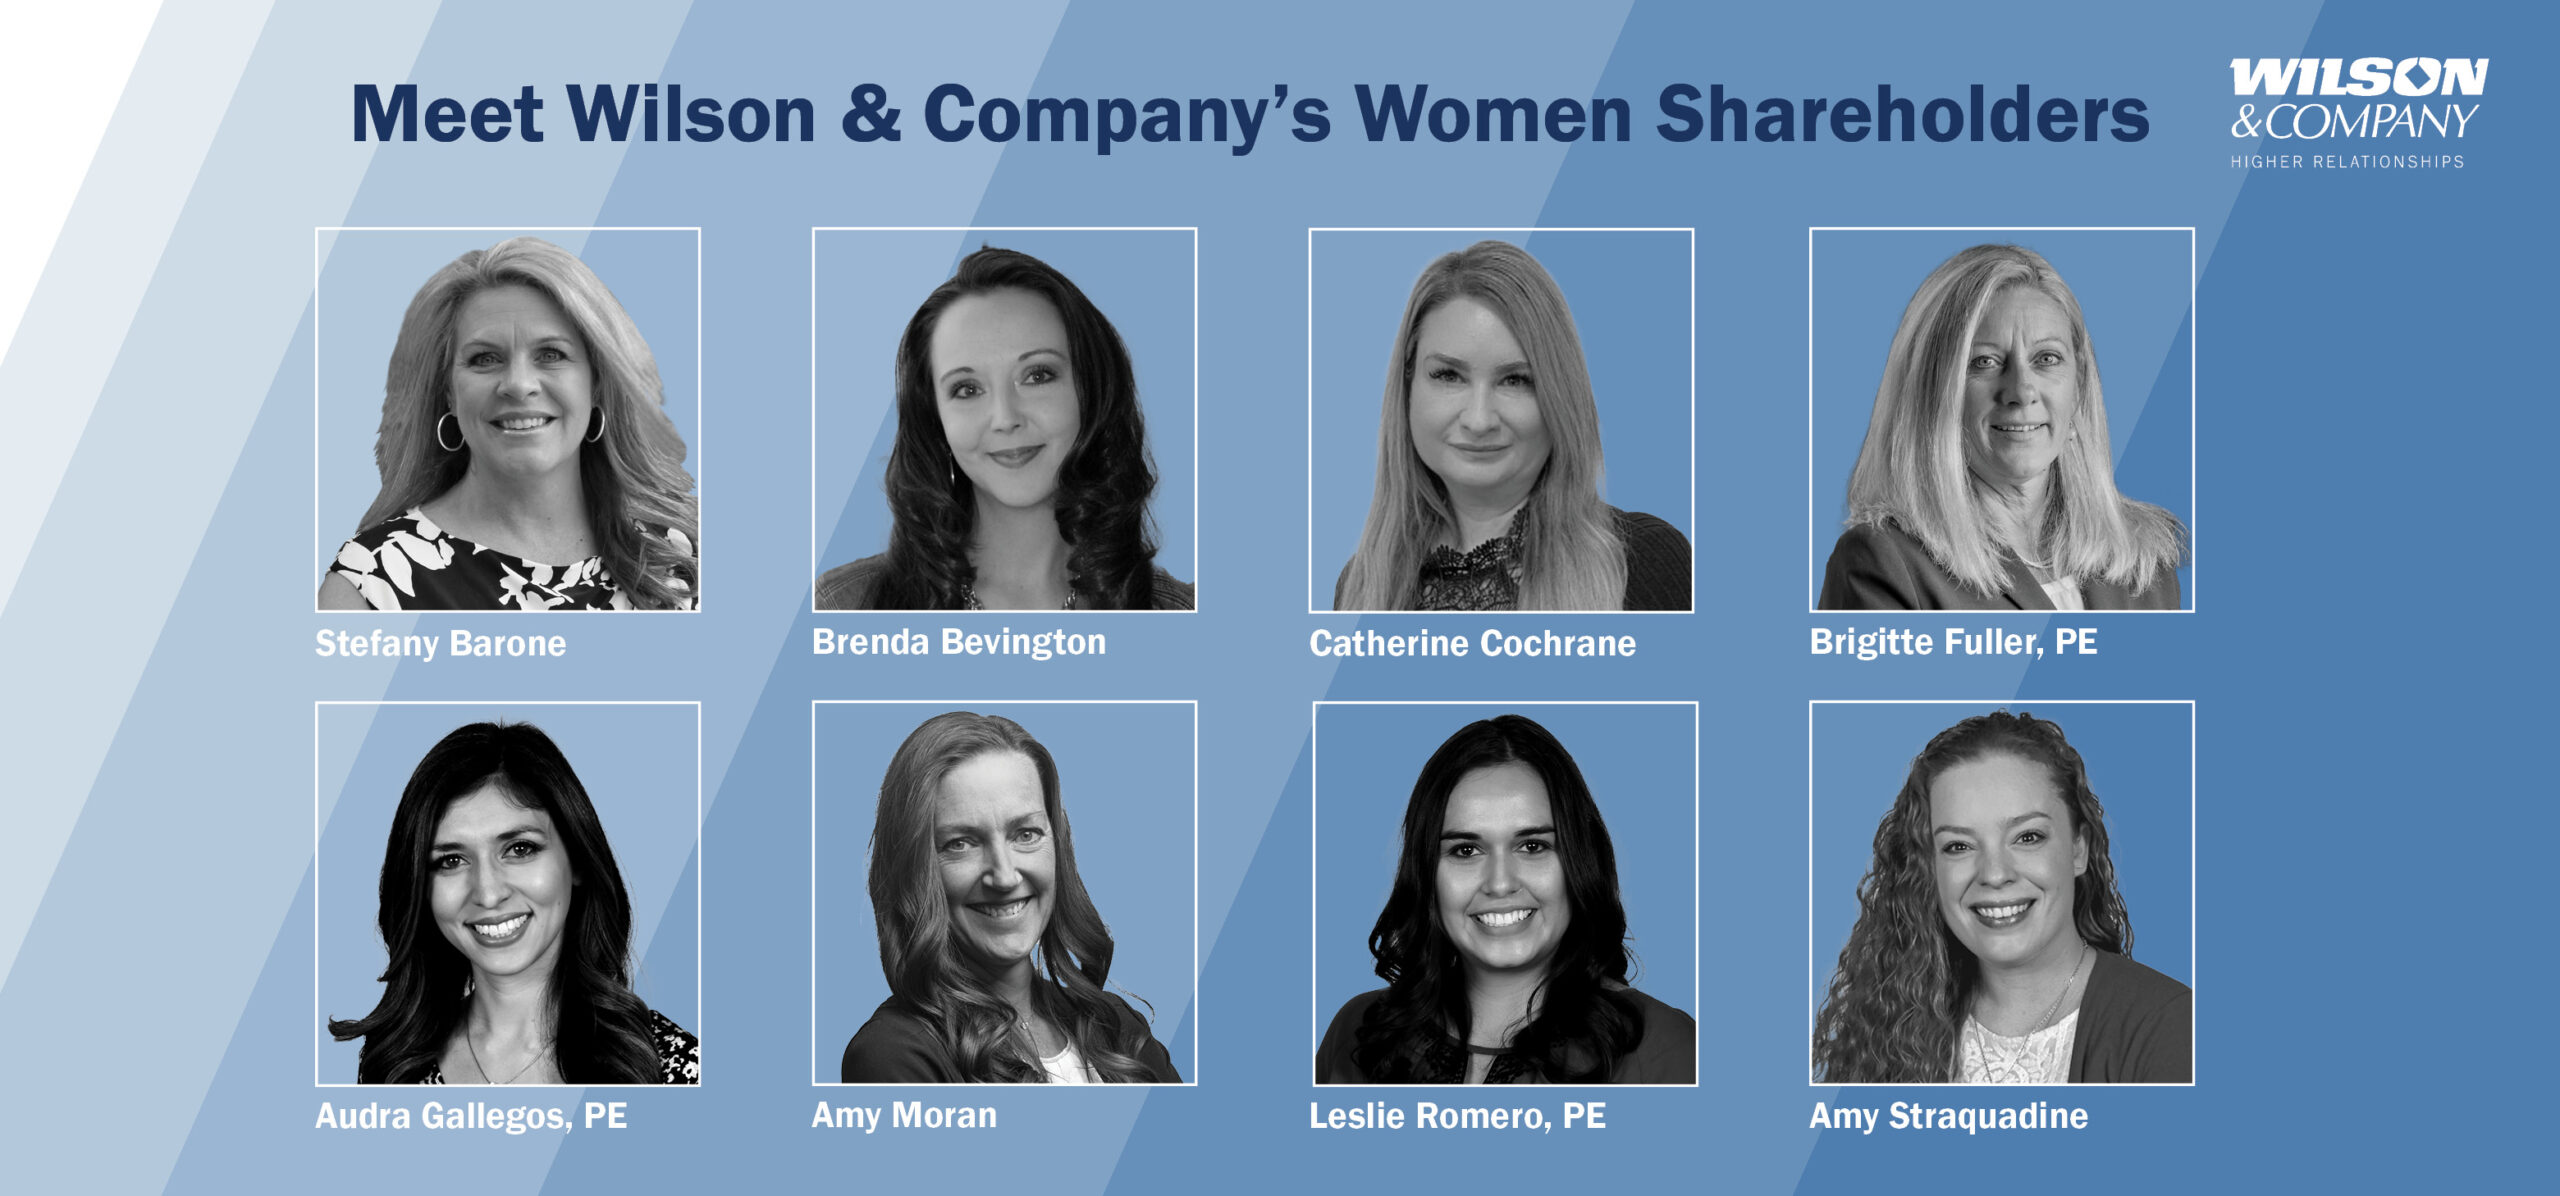 Meet Wilson & Company's Women Shareholders